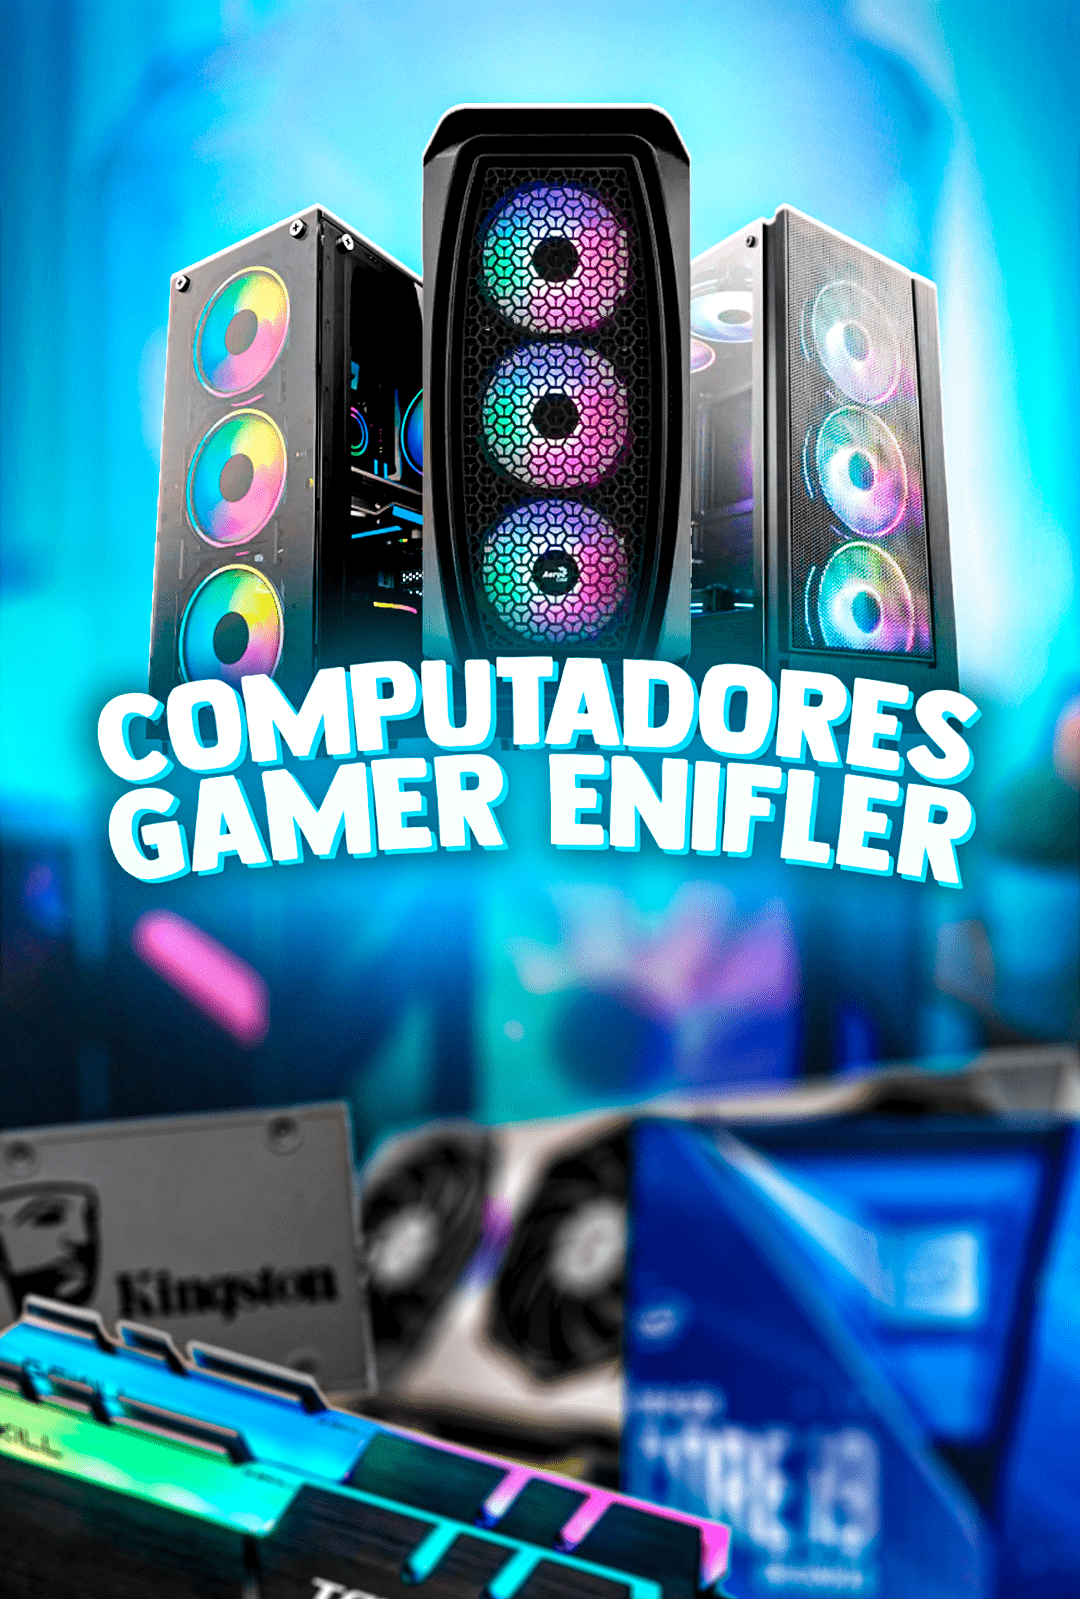 PC Gamer Completo Ryzen 5 5600G, 16GB RAM, HD 1TB + Monitor 21.5 + Kit  Gamer Teclado, Mouse e Headset, Lynx, Enifler